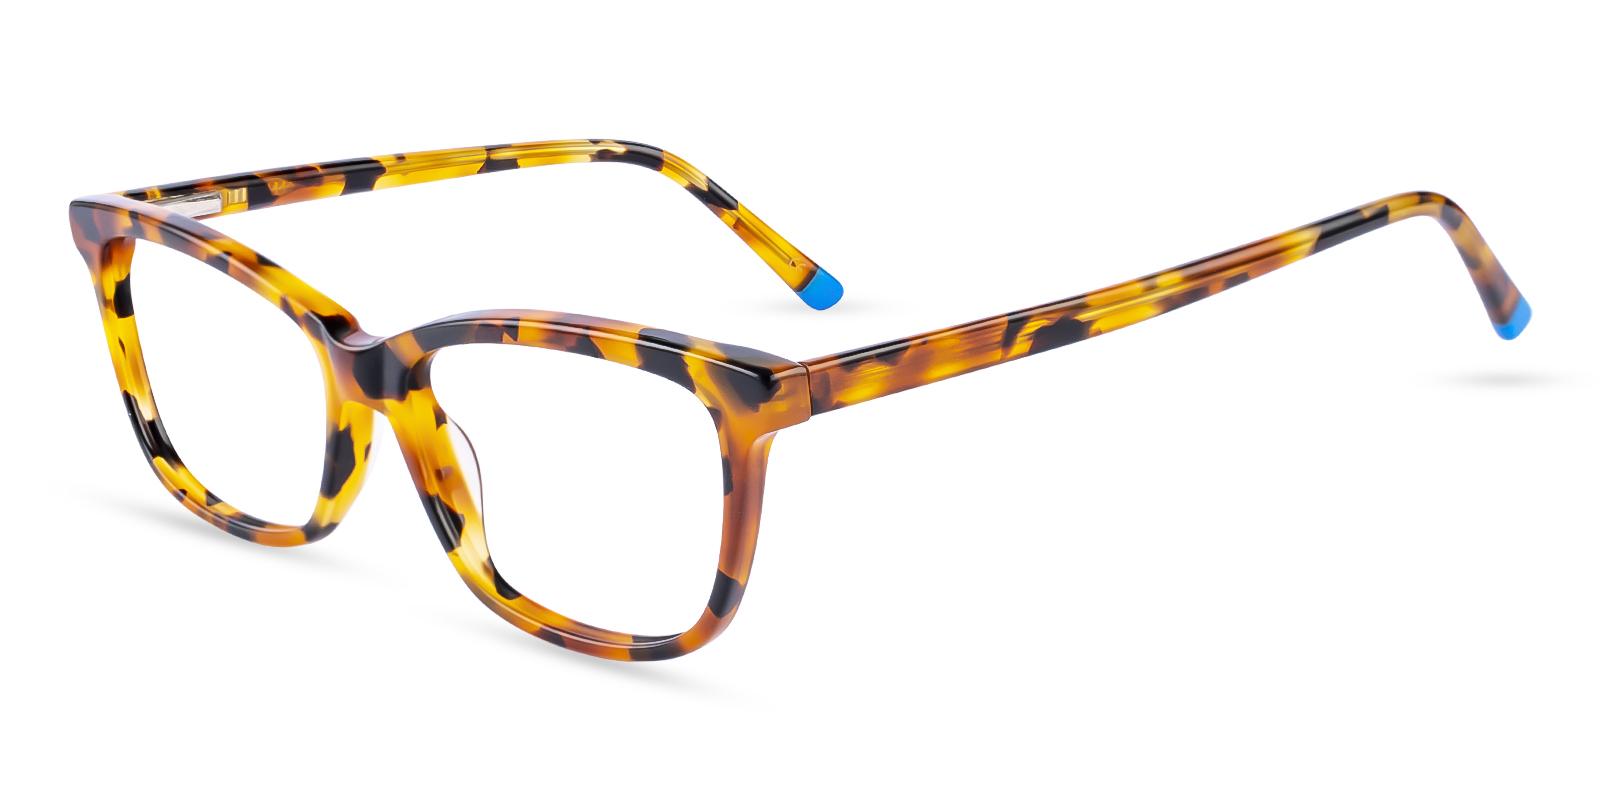 Zion Leopard Acetate Eyeglasses , SpringHinges , UniversalBridgeFit Frames from ABBE Glasses